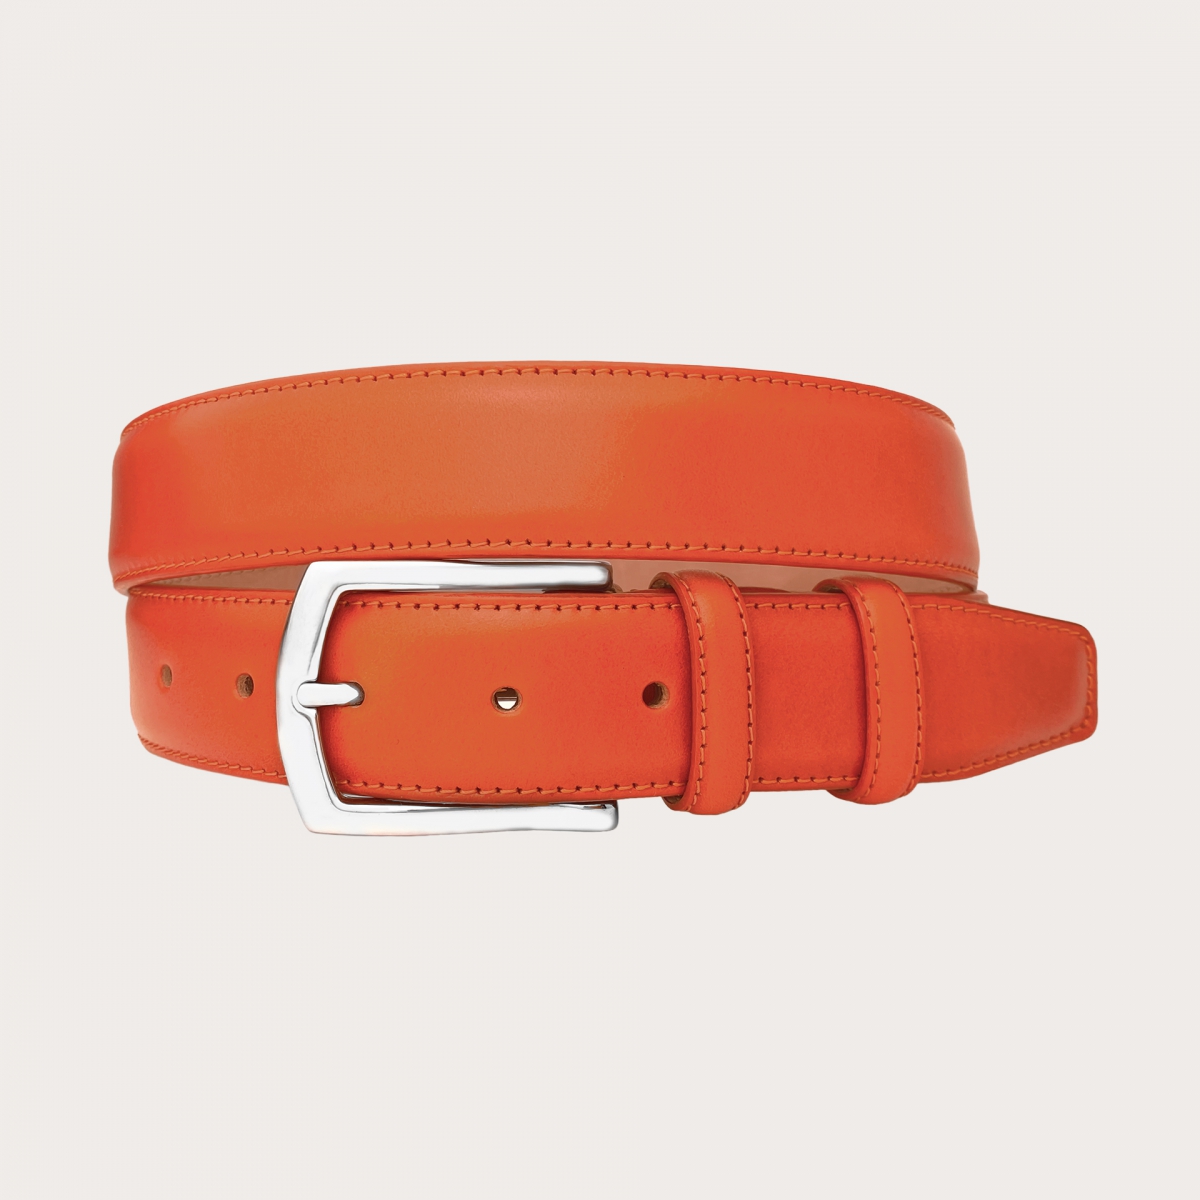 BRUCLE Elegante cintura in cuoio fiorentino arancione